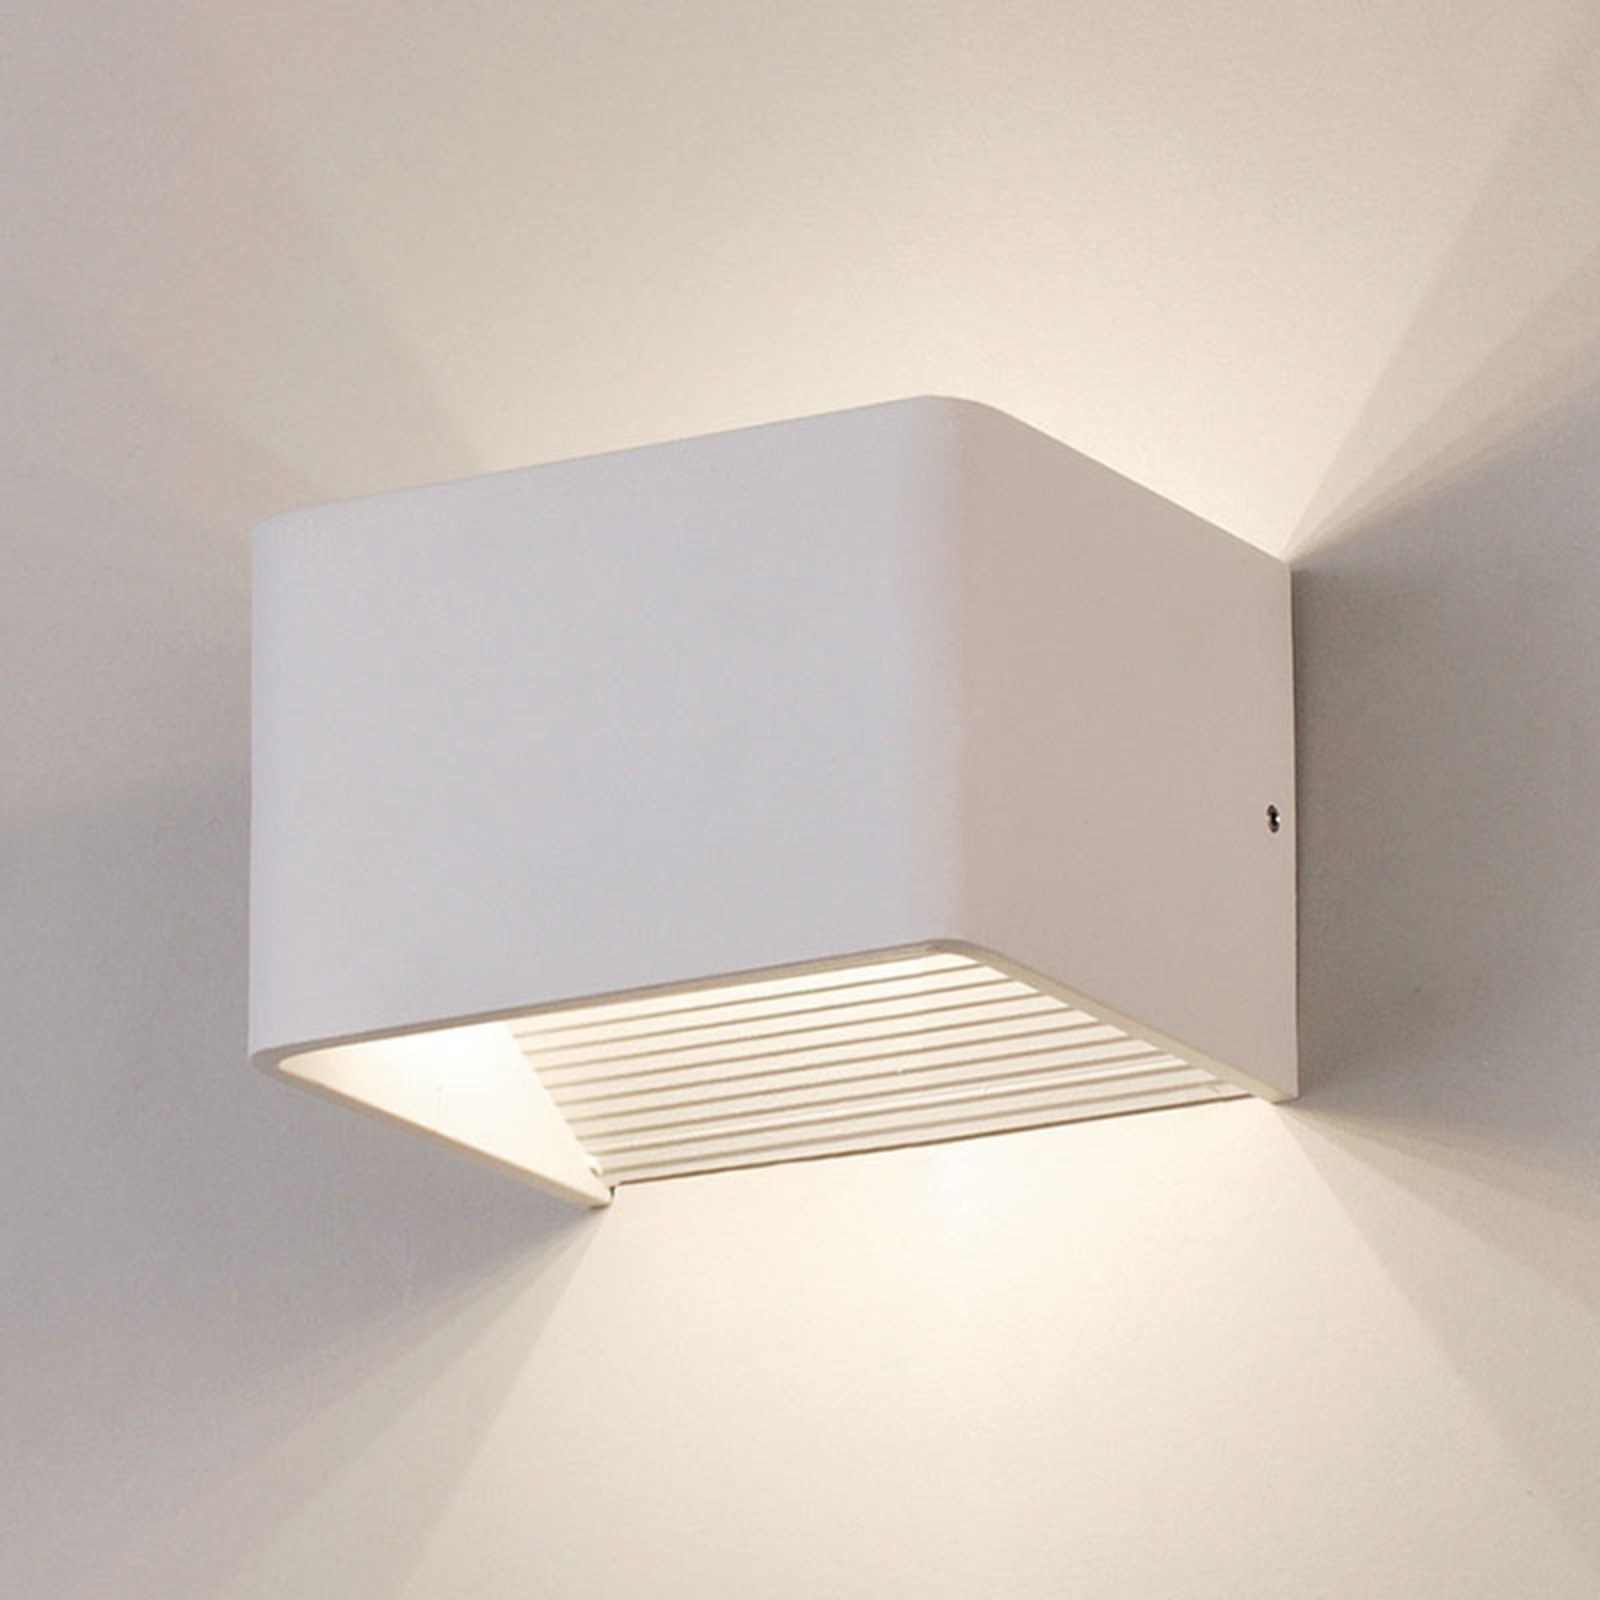 Icon LED wall light, 2,700 K, width 12 cm